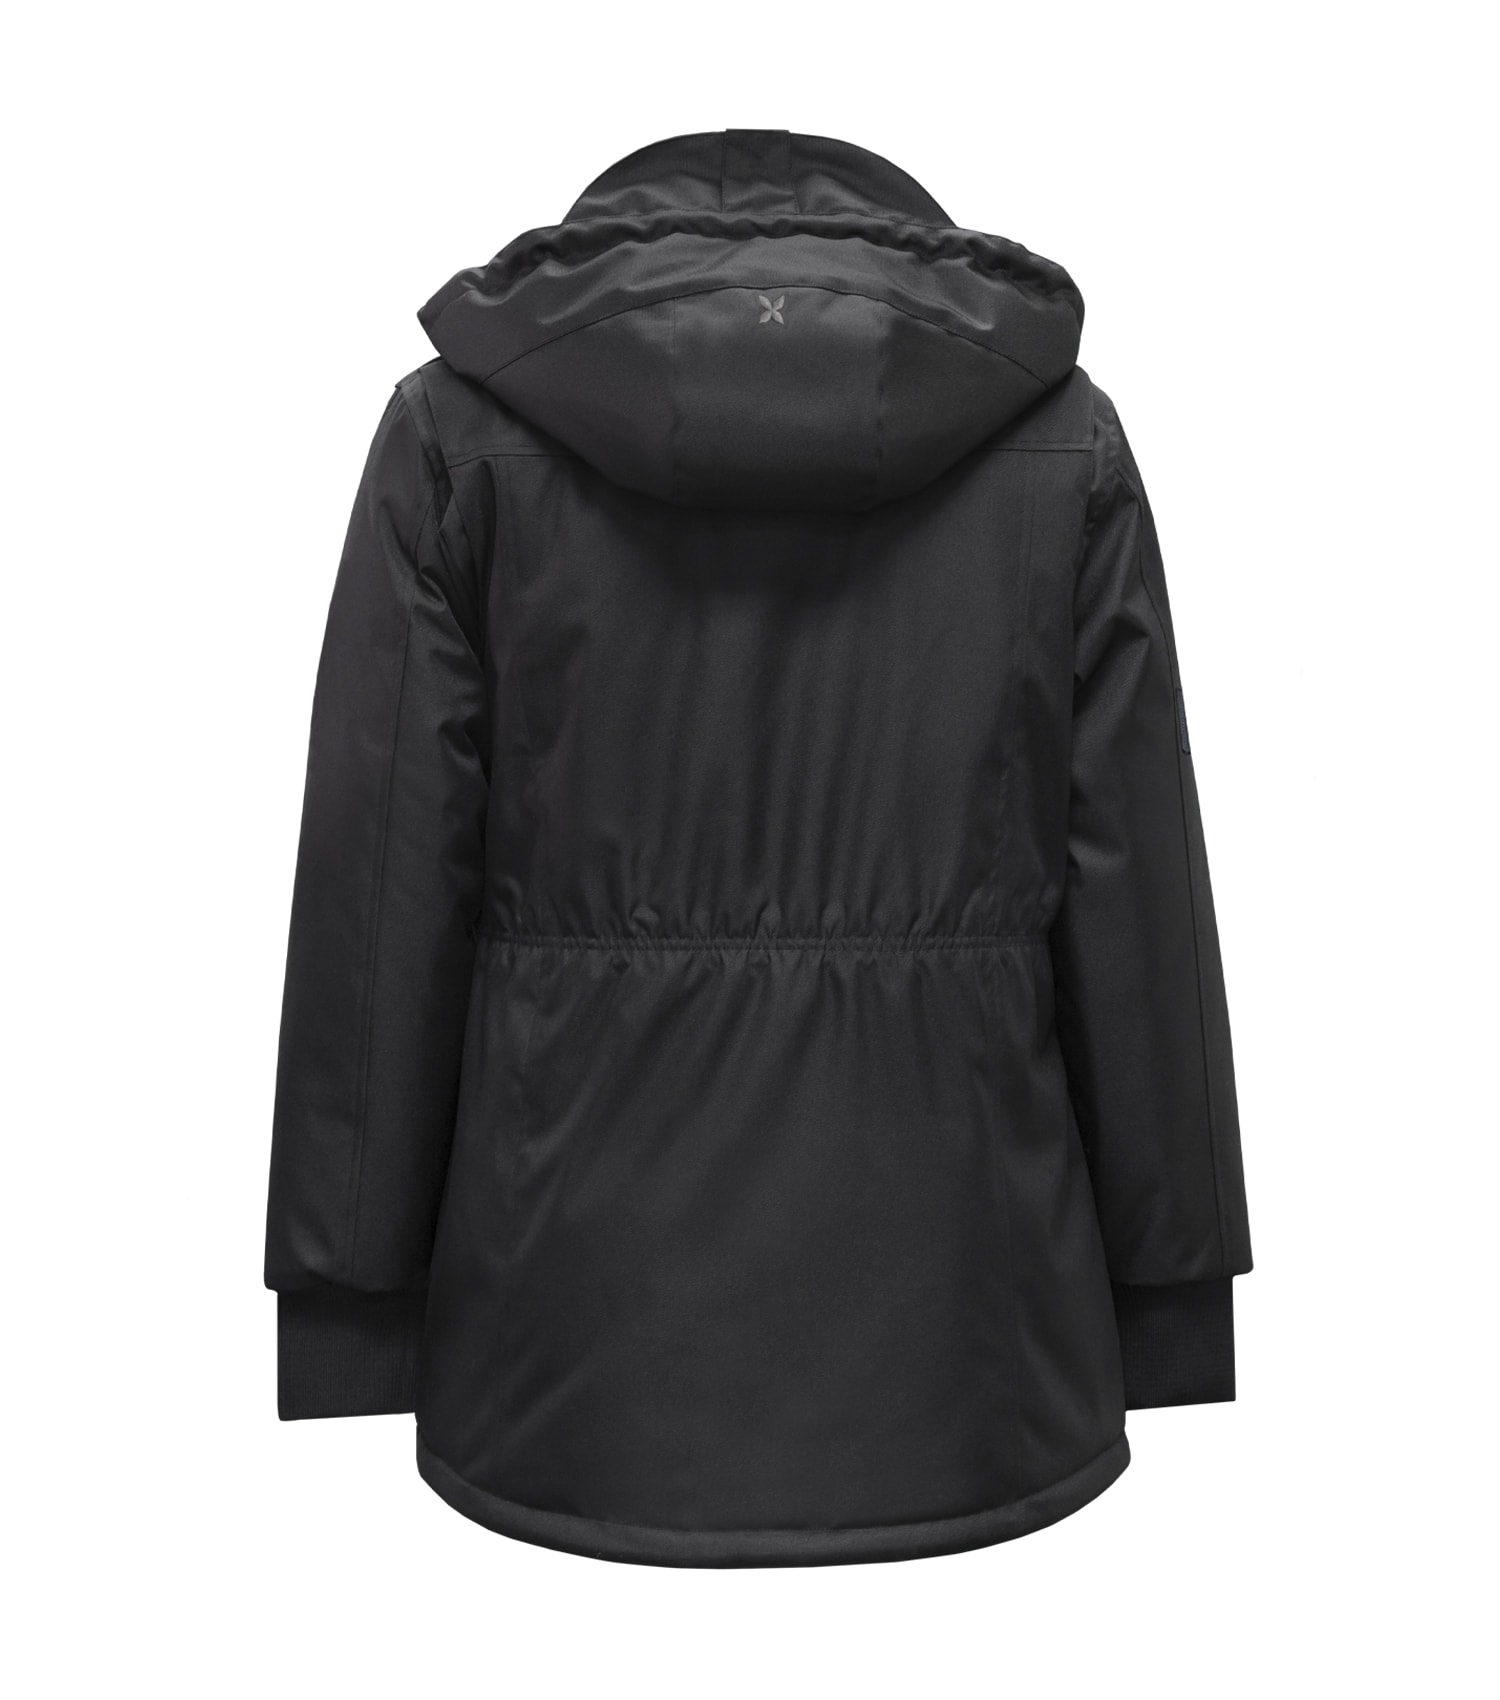 women’s lined winter coat color black pf489 rear view